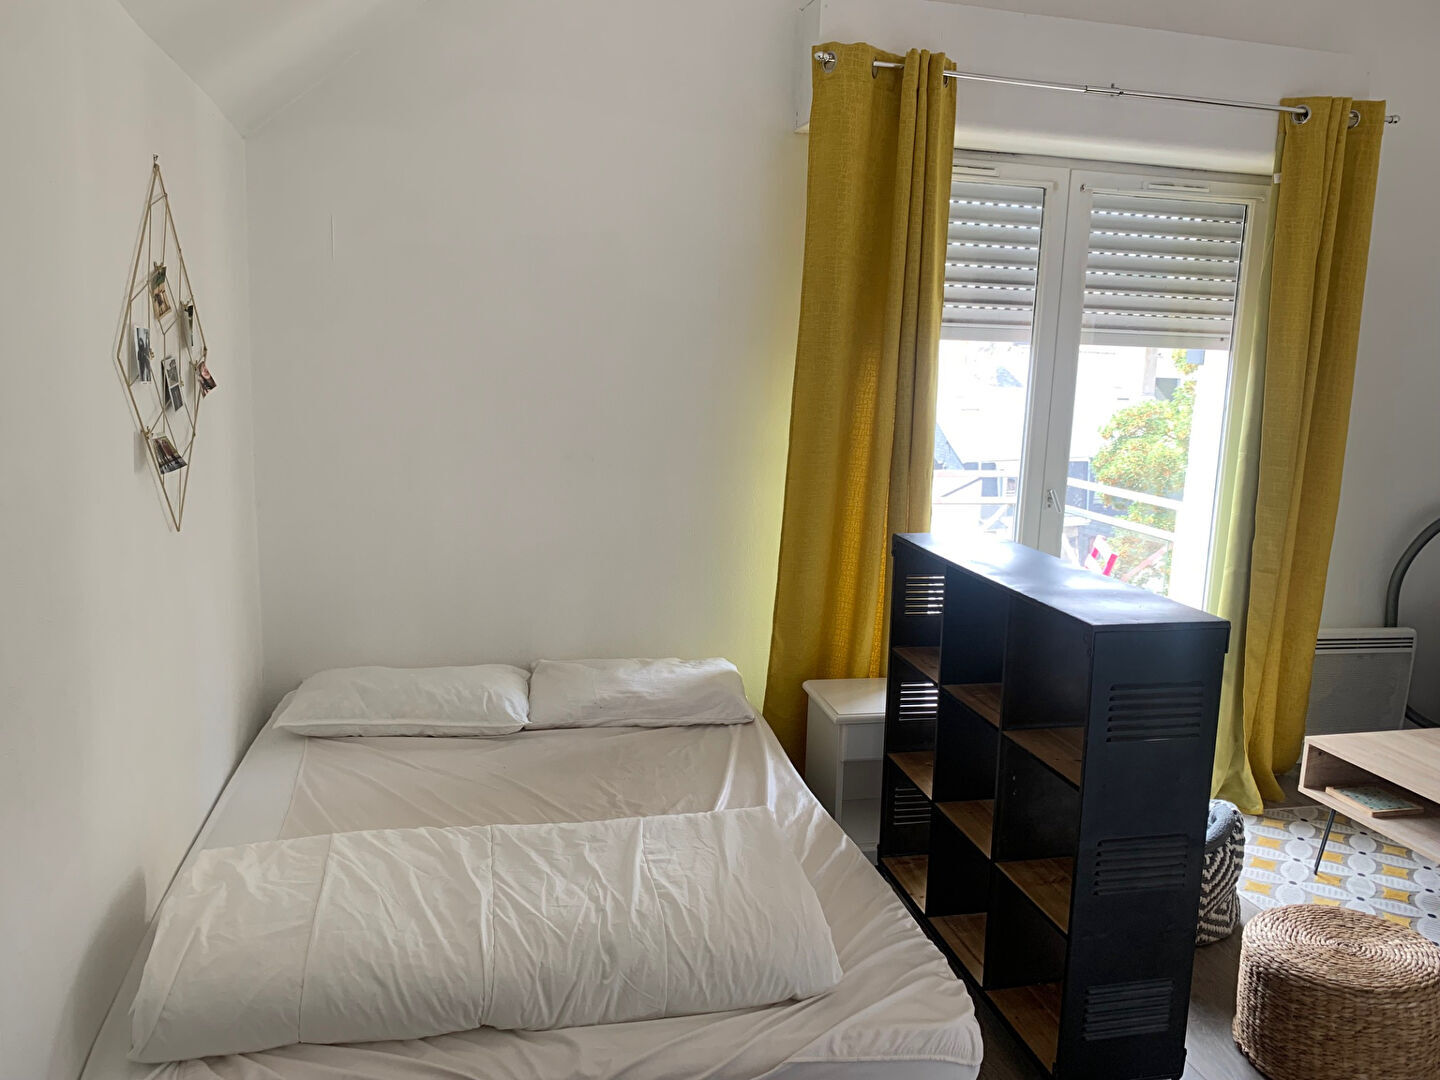 Appartement 1 pièce - 25 m² environ - 54805033b.jpg | Kermarrec Habitation